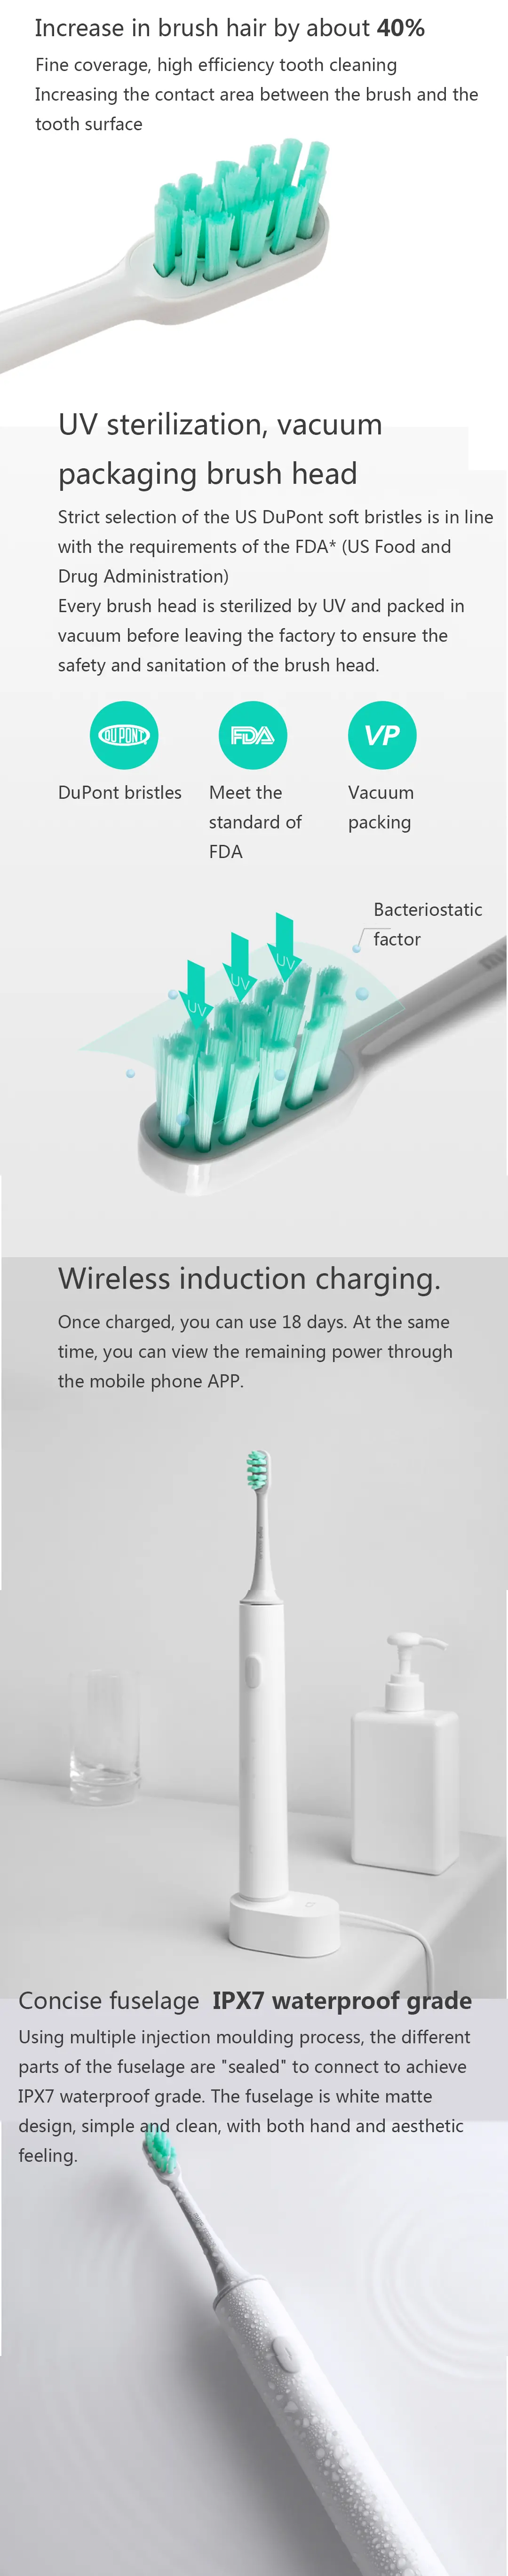 MIJIA T500 Electric Toothbrush Smart Sonic Brush Ultrasonic Whitening Teeth vibrator Wireless Oral Hygiene Cleaner - White